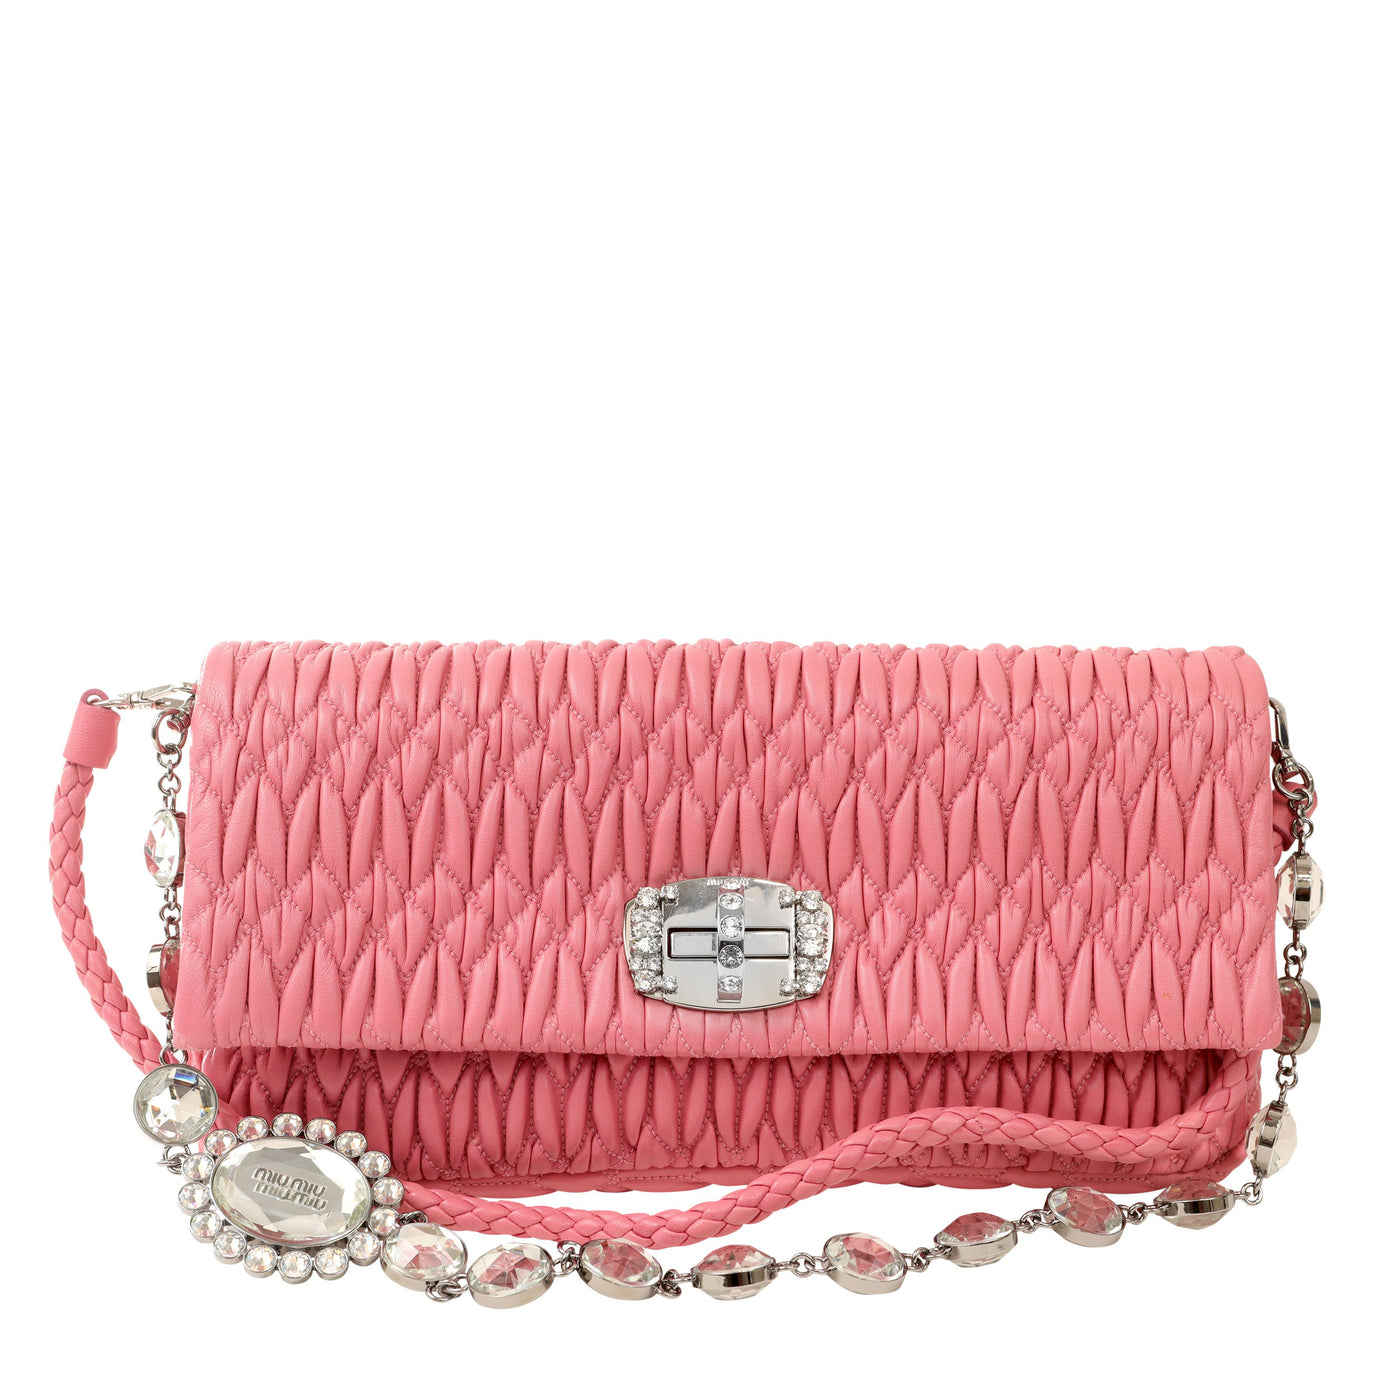 Miu Miu Rose Pink Iconic Crystal Cloquè Small Shoulder Bag with Silver Hardware